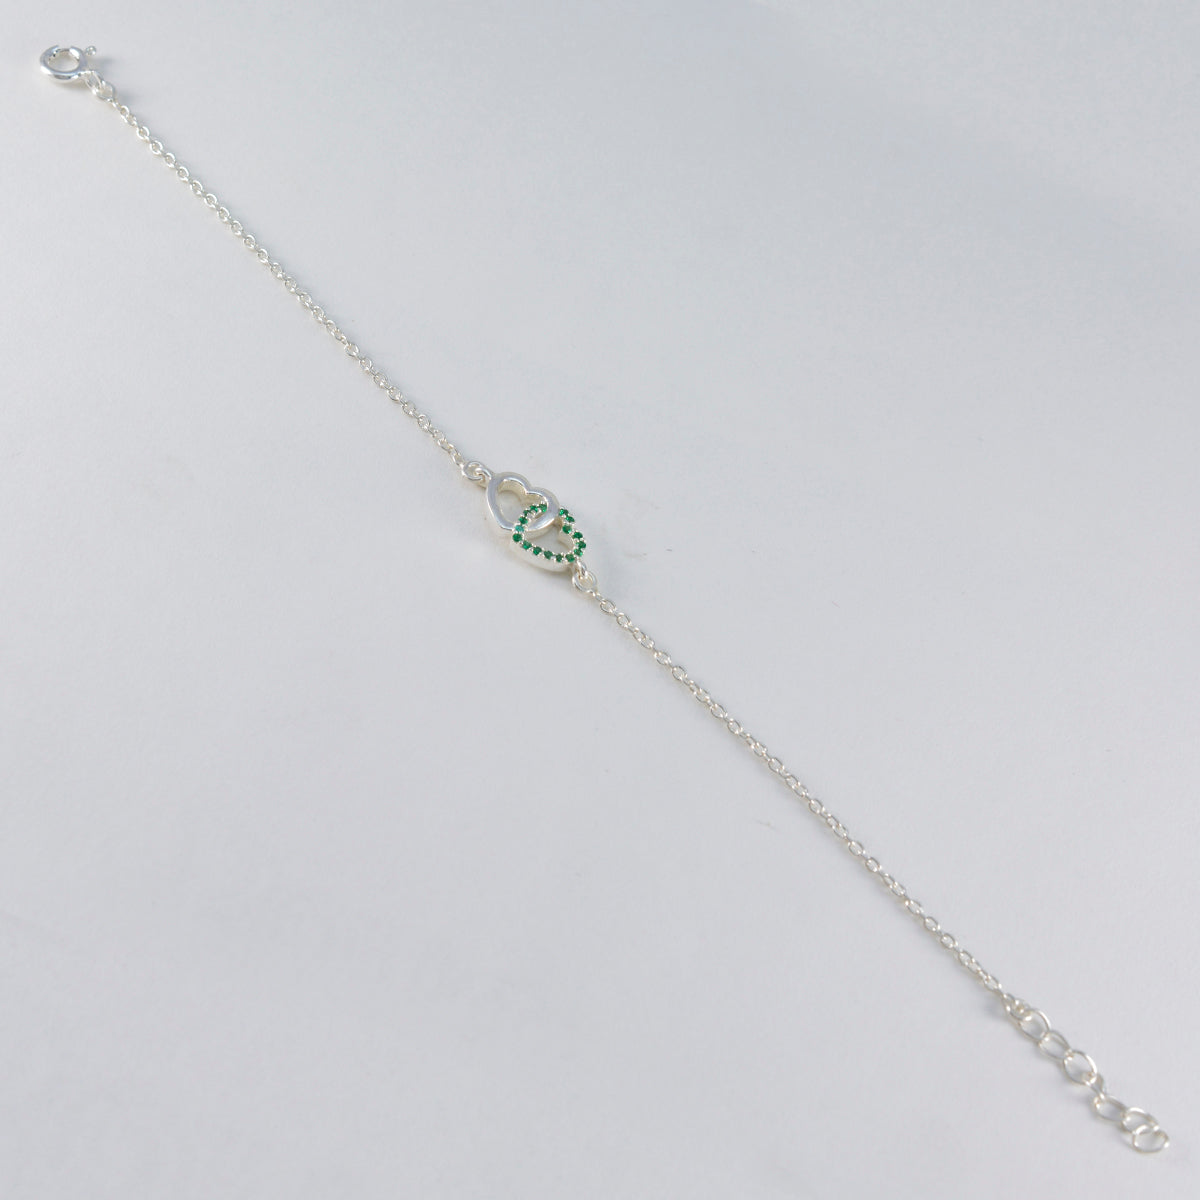 Riyo Wholesale 925 Sterling Silver Bracelet For Womens Emerald CZ Bracelet Bezel Setting Bracelet with Spring Ring Charm Bracelet L Size 6-8.5 Inch.